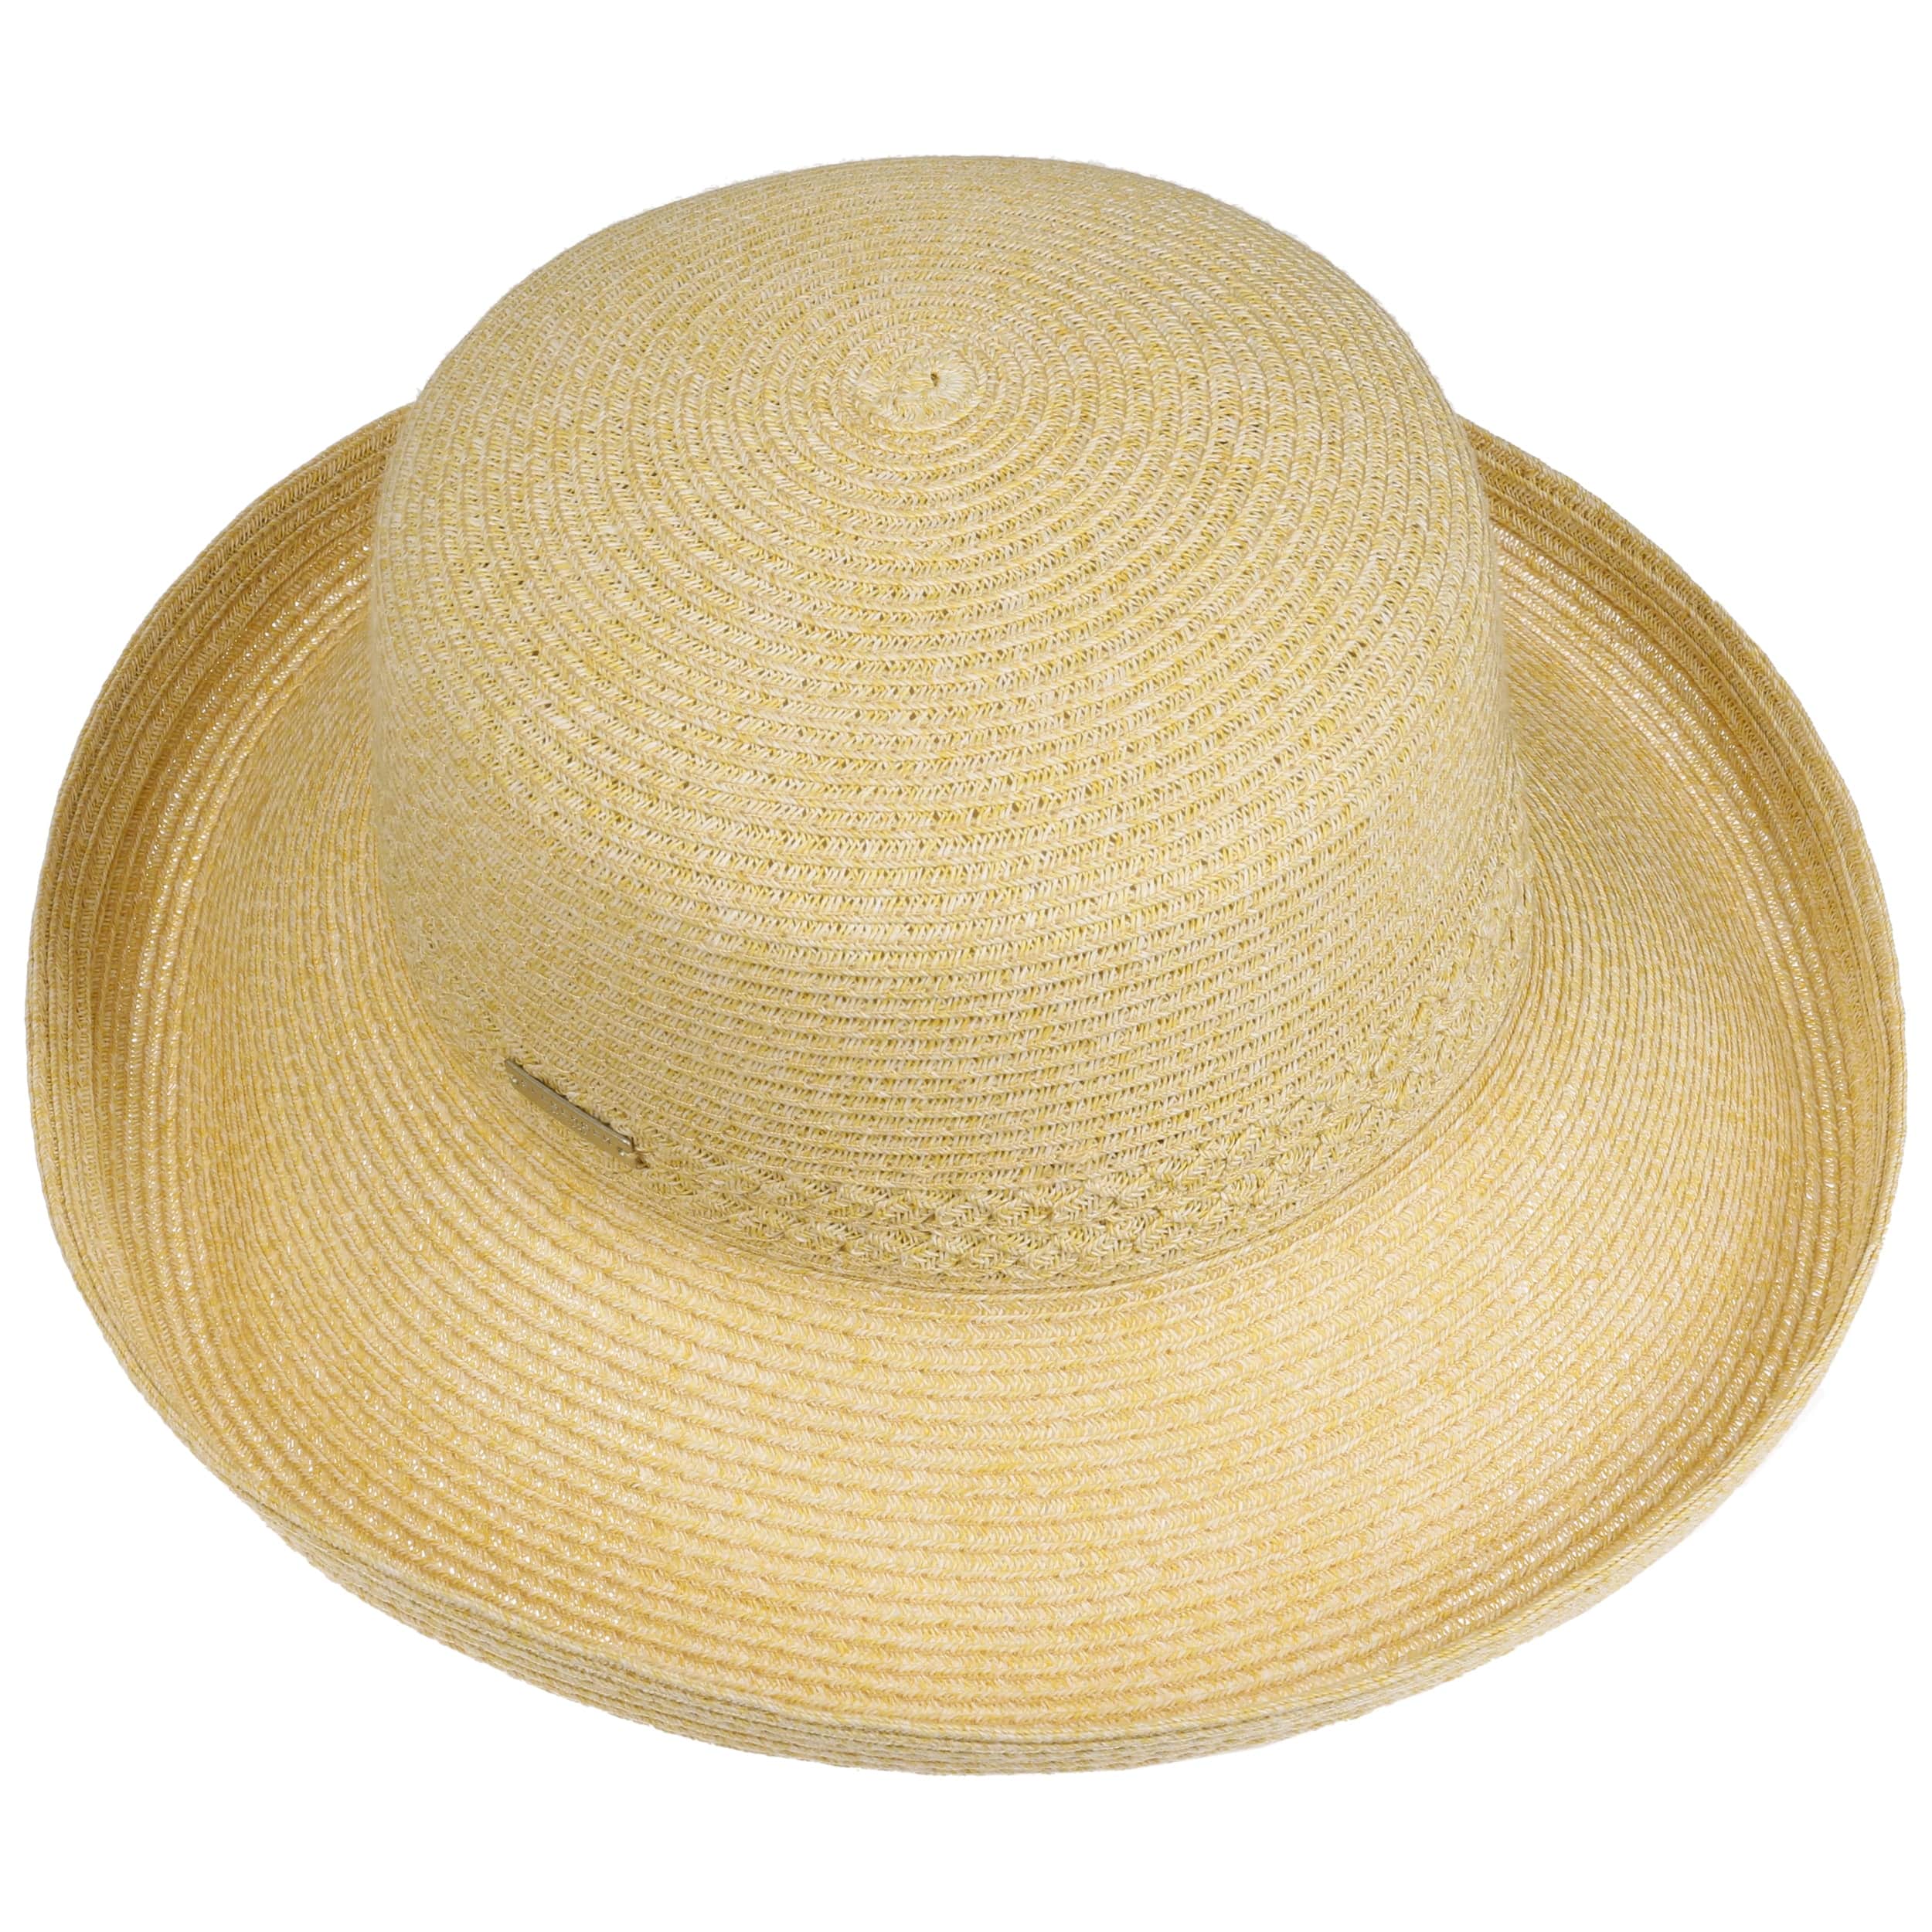 Bolero Straw Hat by Seeberger - 53,95